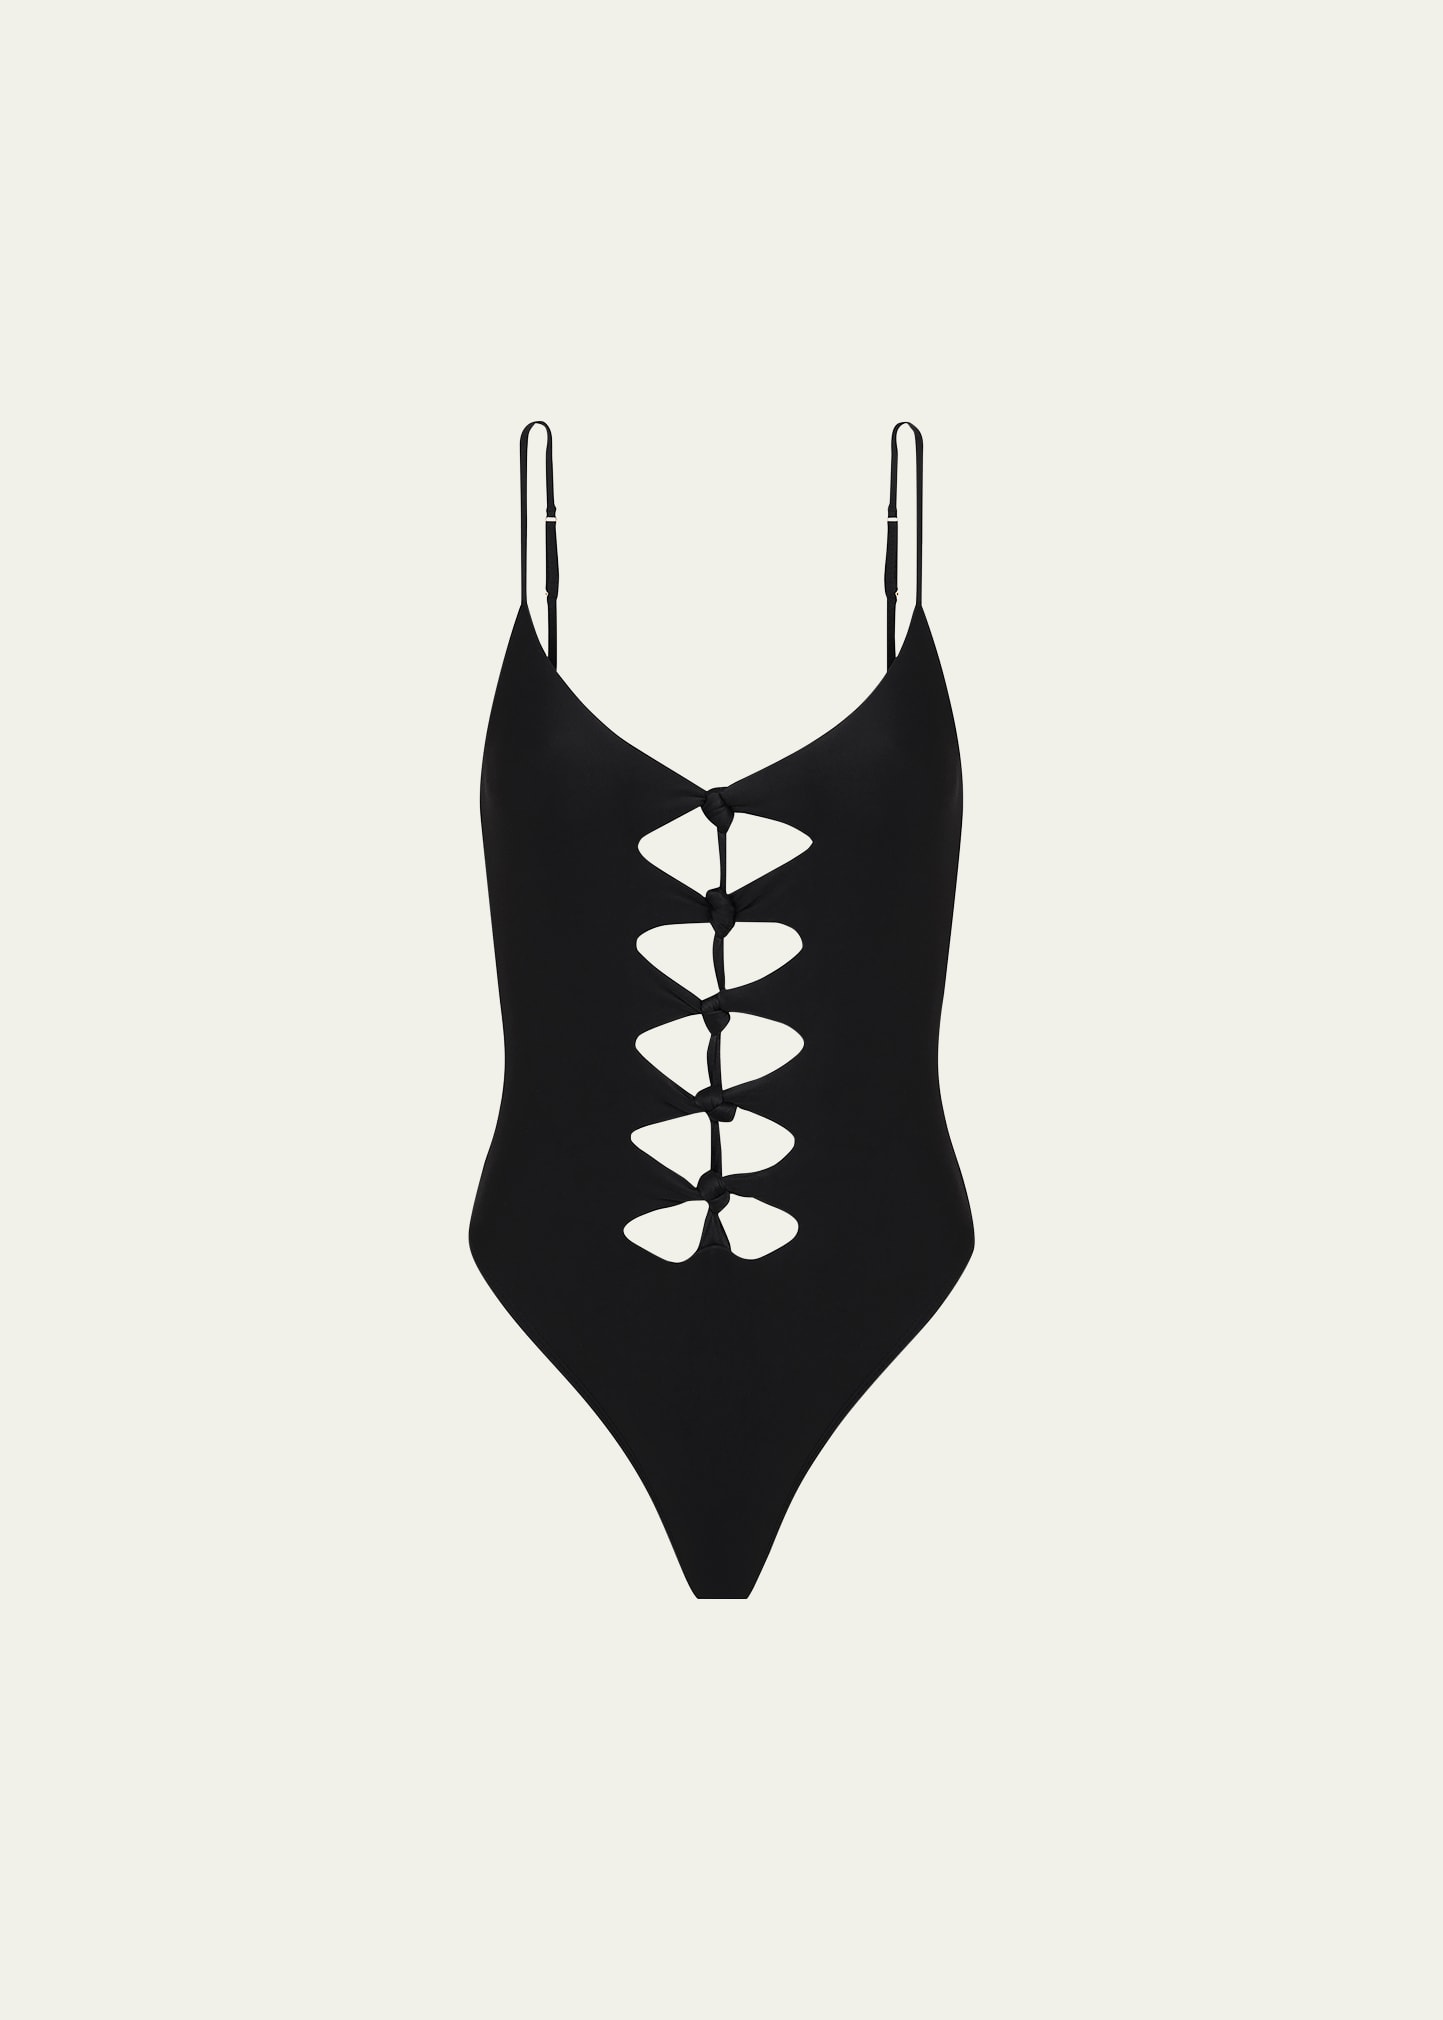 Vix Solid Megan Brazilian One-piece Swimsuit In Black